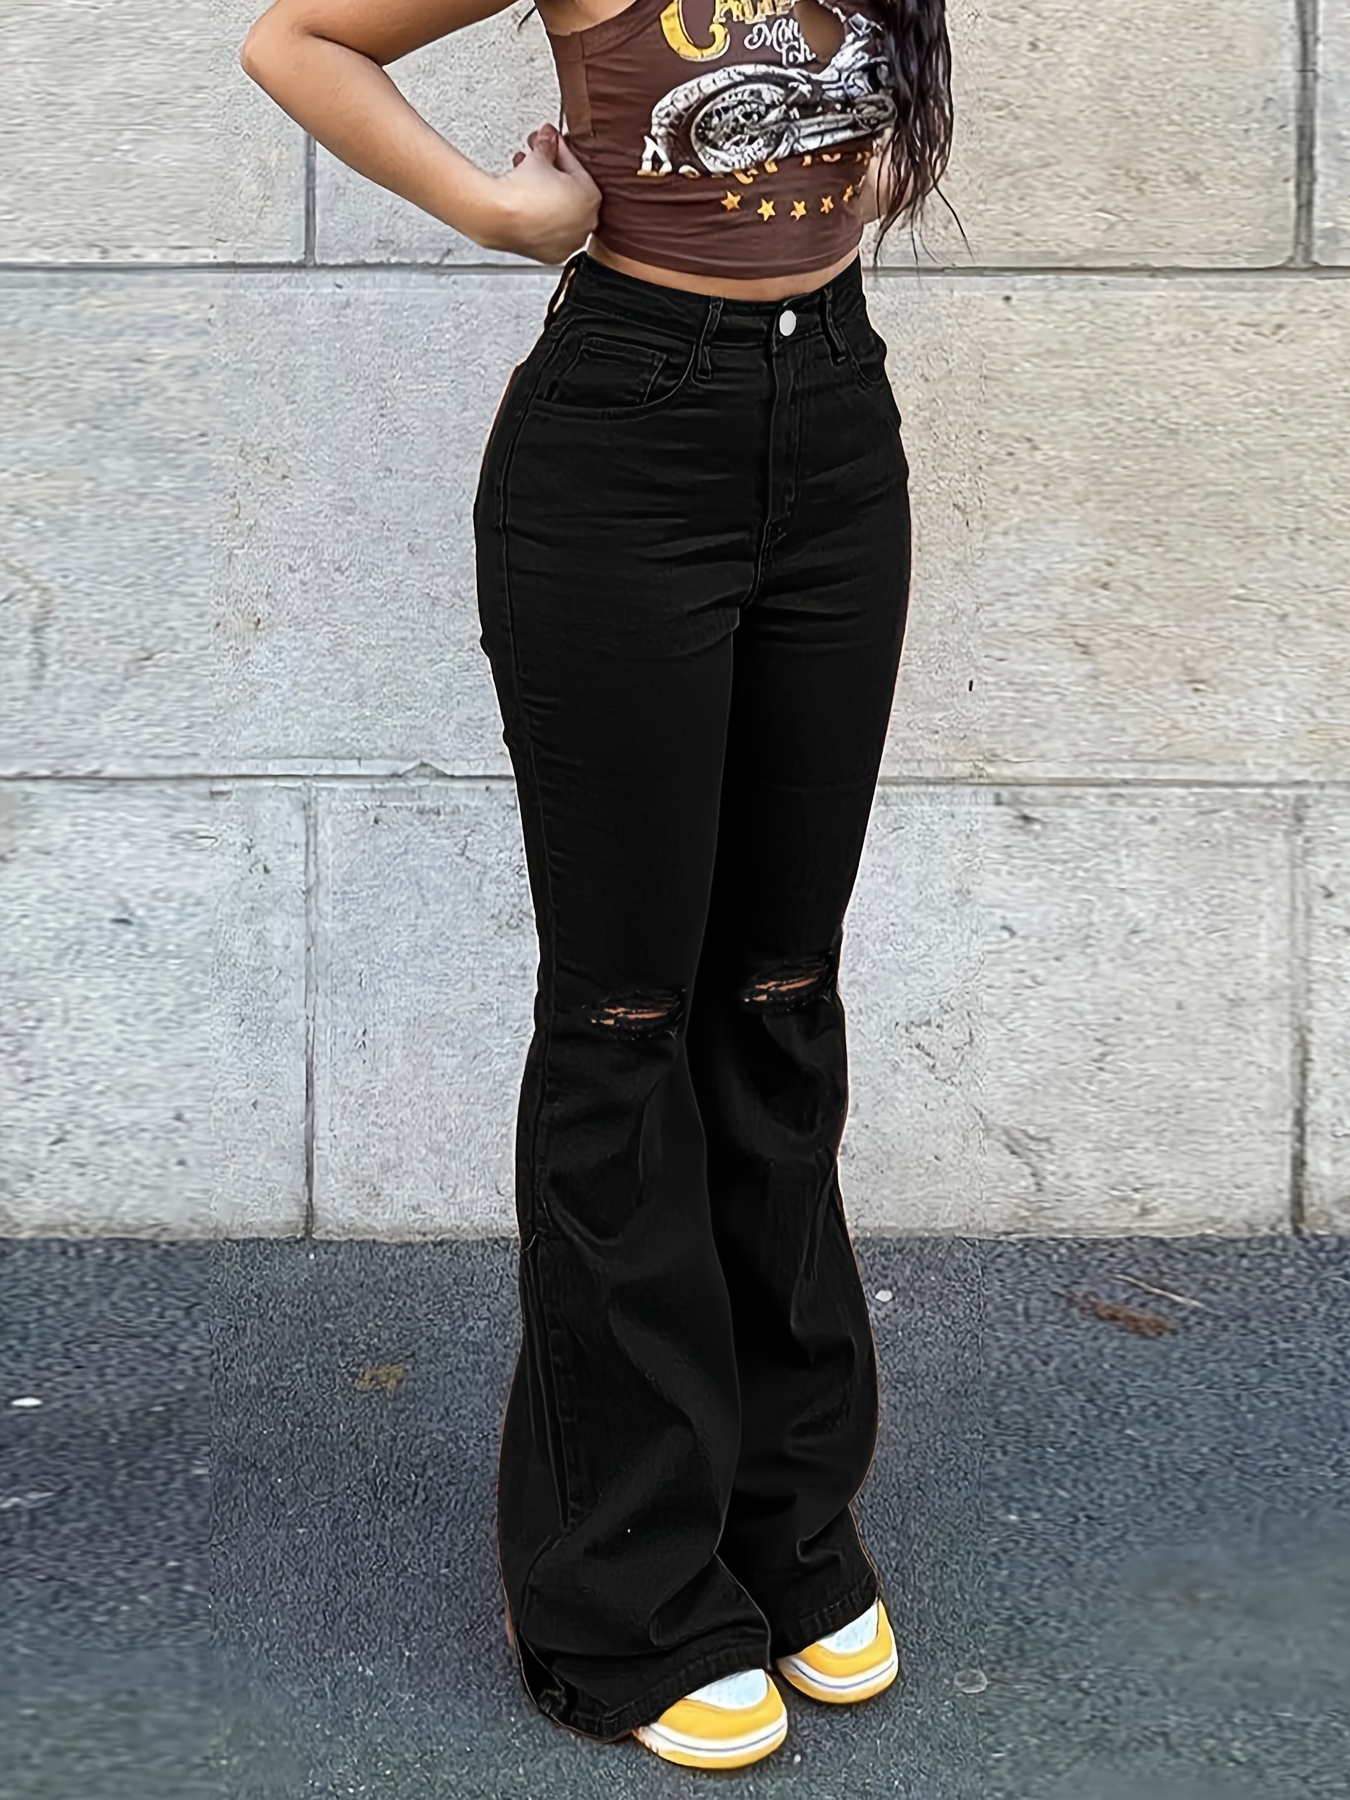 Jeans Rectos Negros De Cintura Alta, Pantalones De Mezclilla De Tiro Alto  Sin Estiramiento, Pantalones De Mezclilla Y Ropa De Mujer